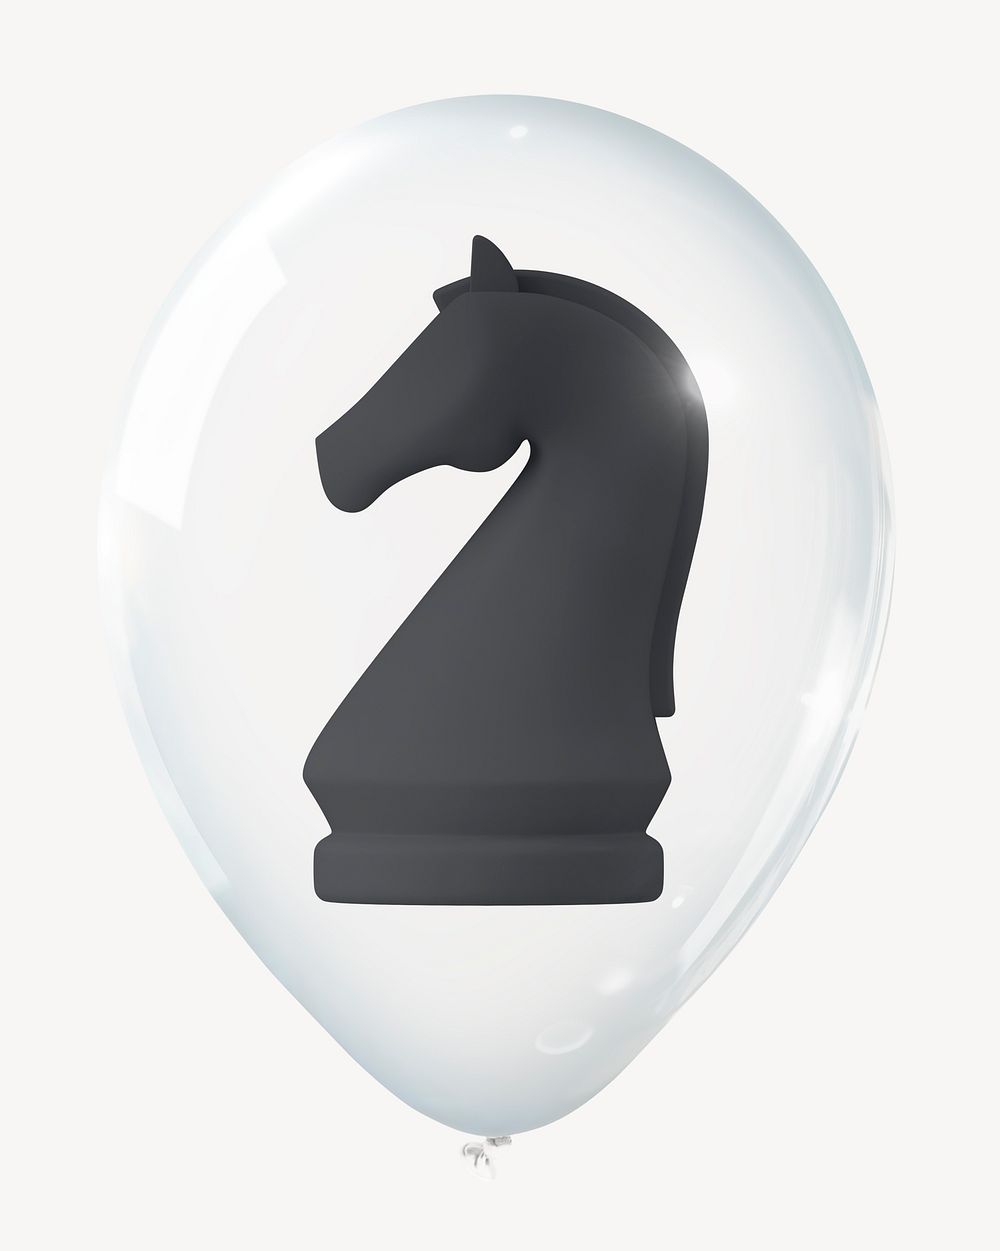 Chess piece 3D balloon, business strategy clipart